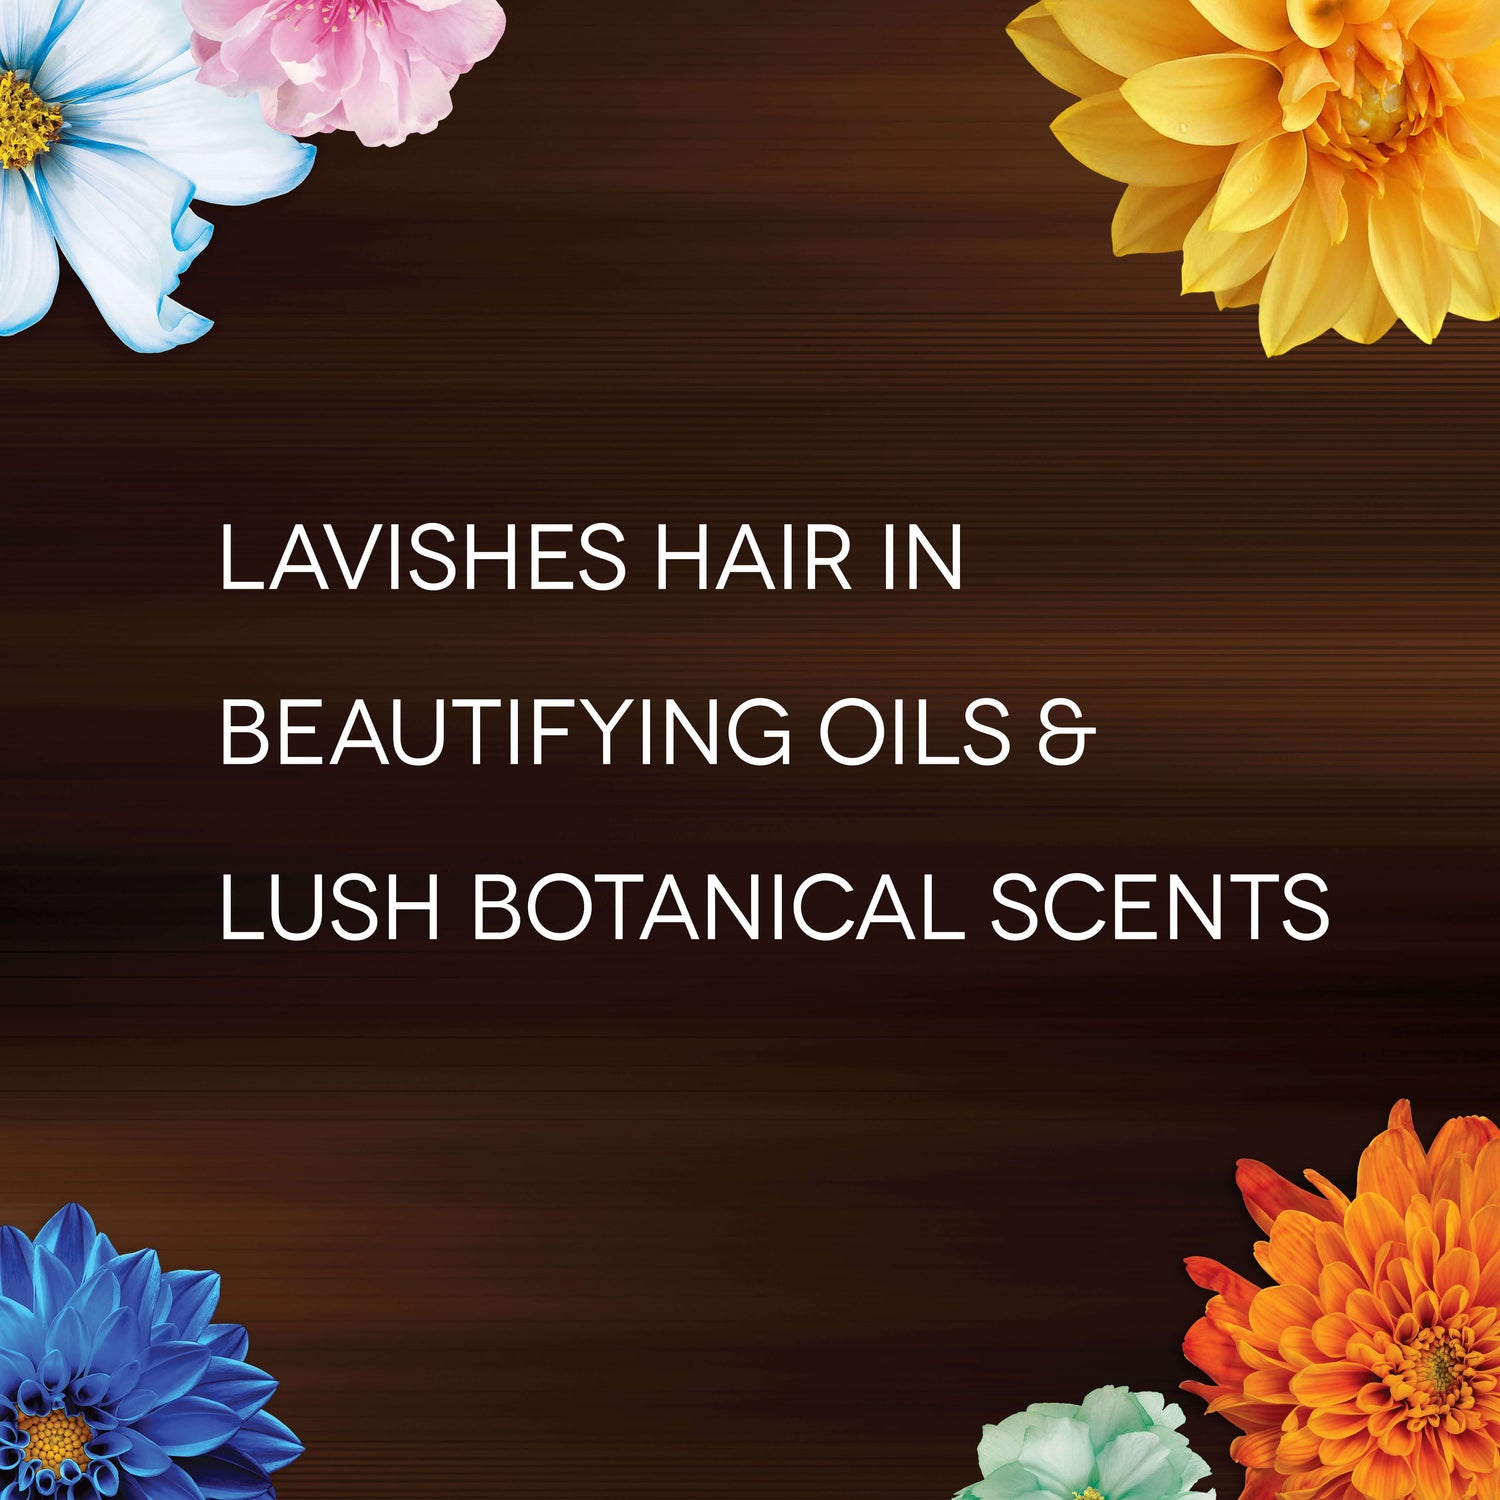 Lavishes Hair in Beautifying Oils and Lush Botanicals